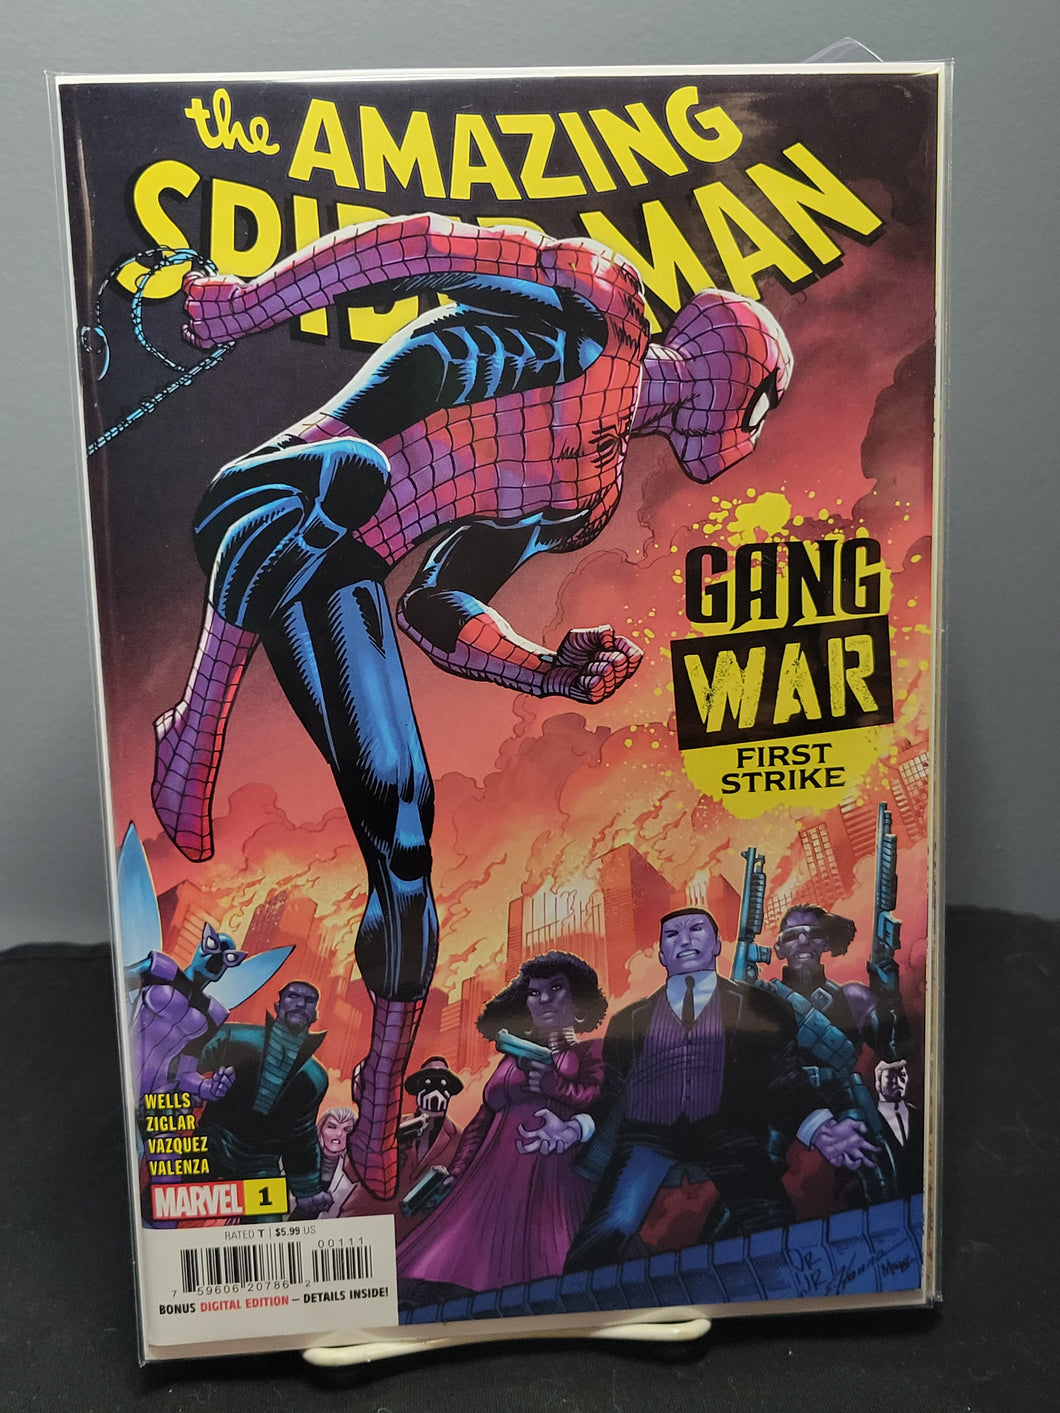 Amazing Spider-Man Gang War #1